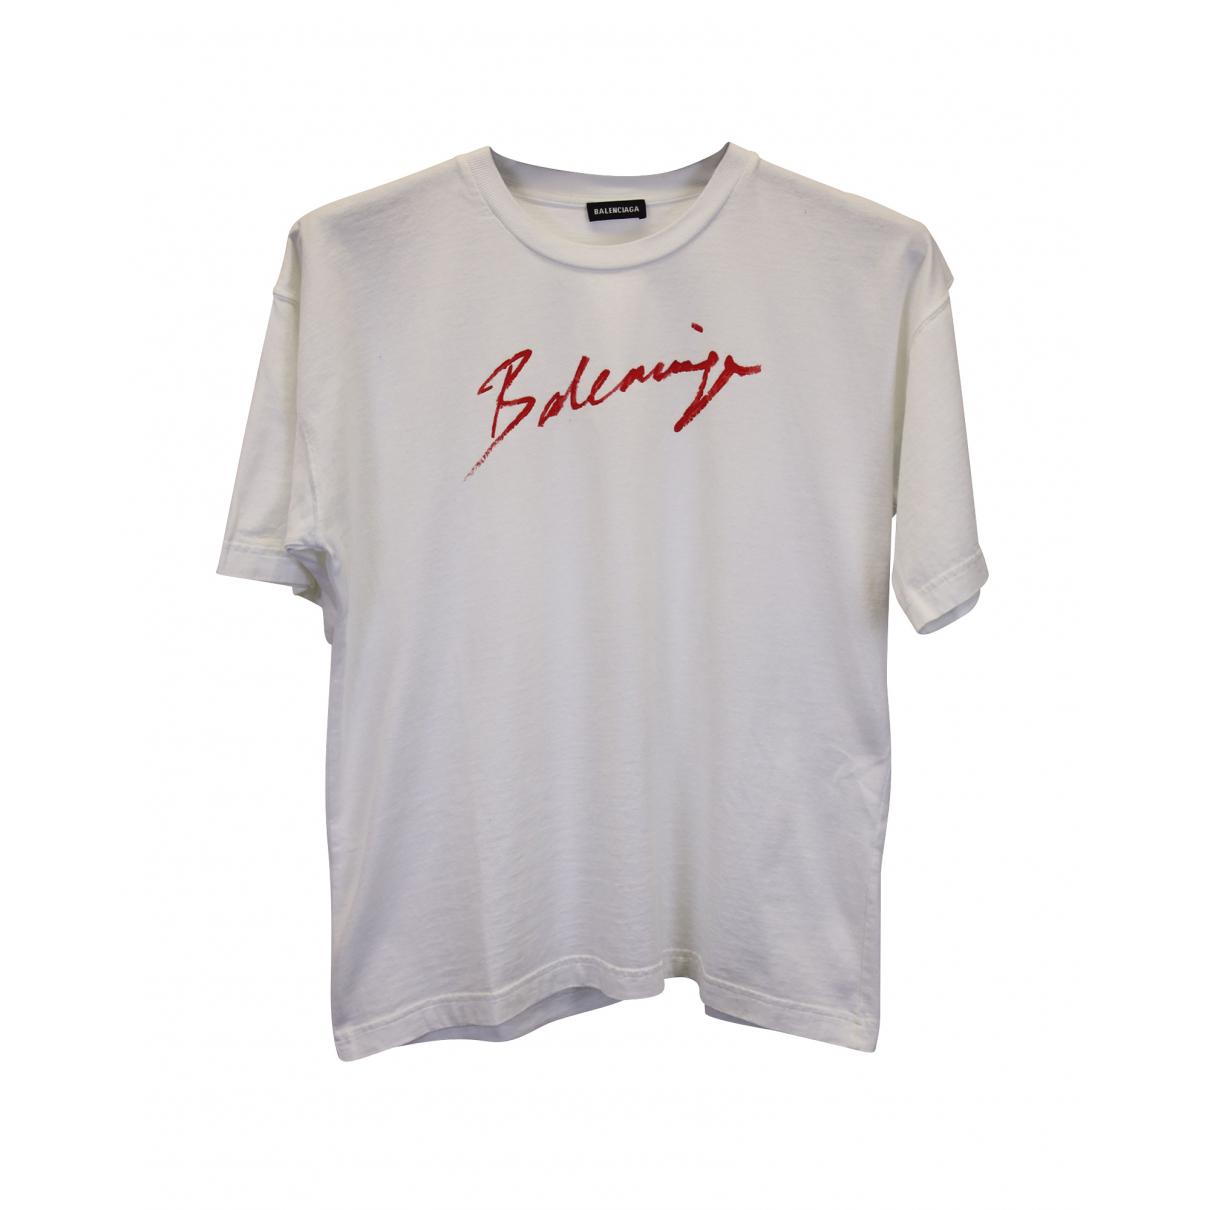 T-shirt Balenciaga White size M International in Cotton - 33508287